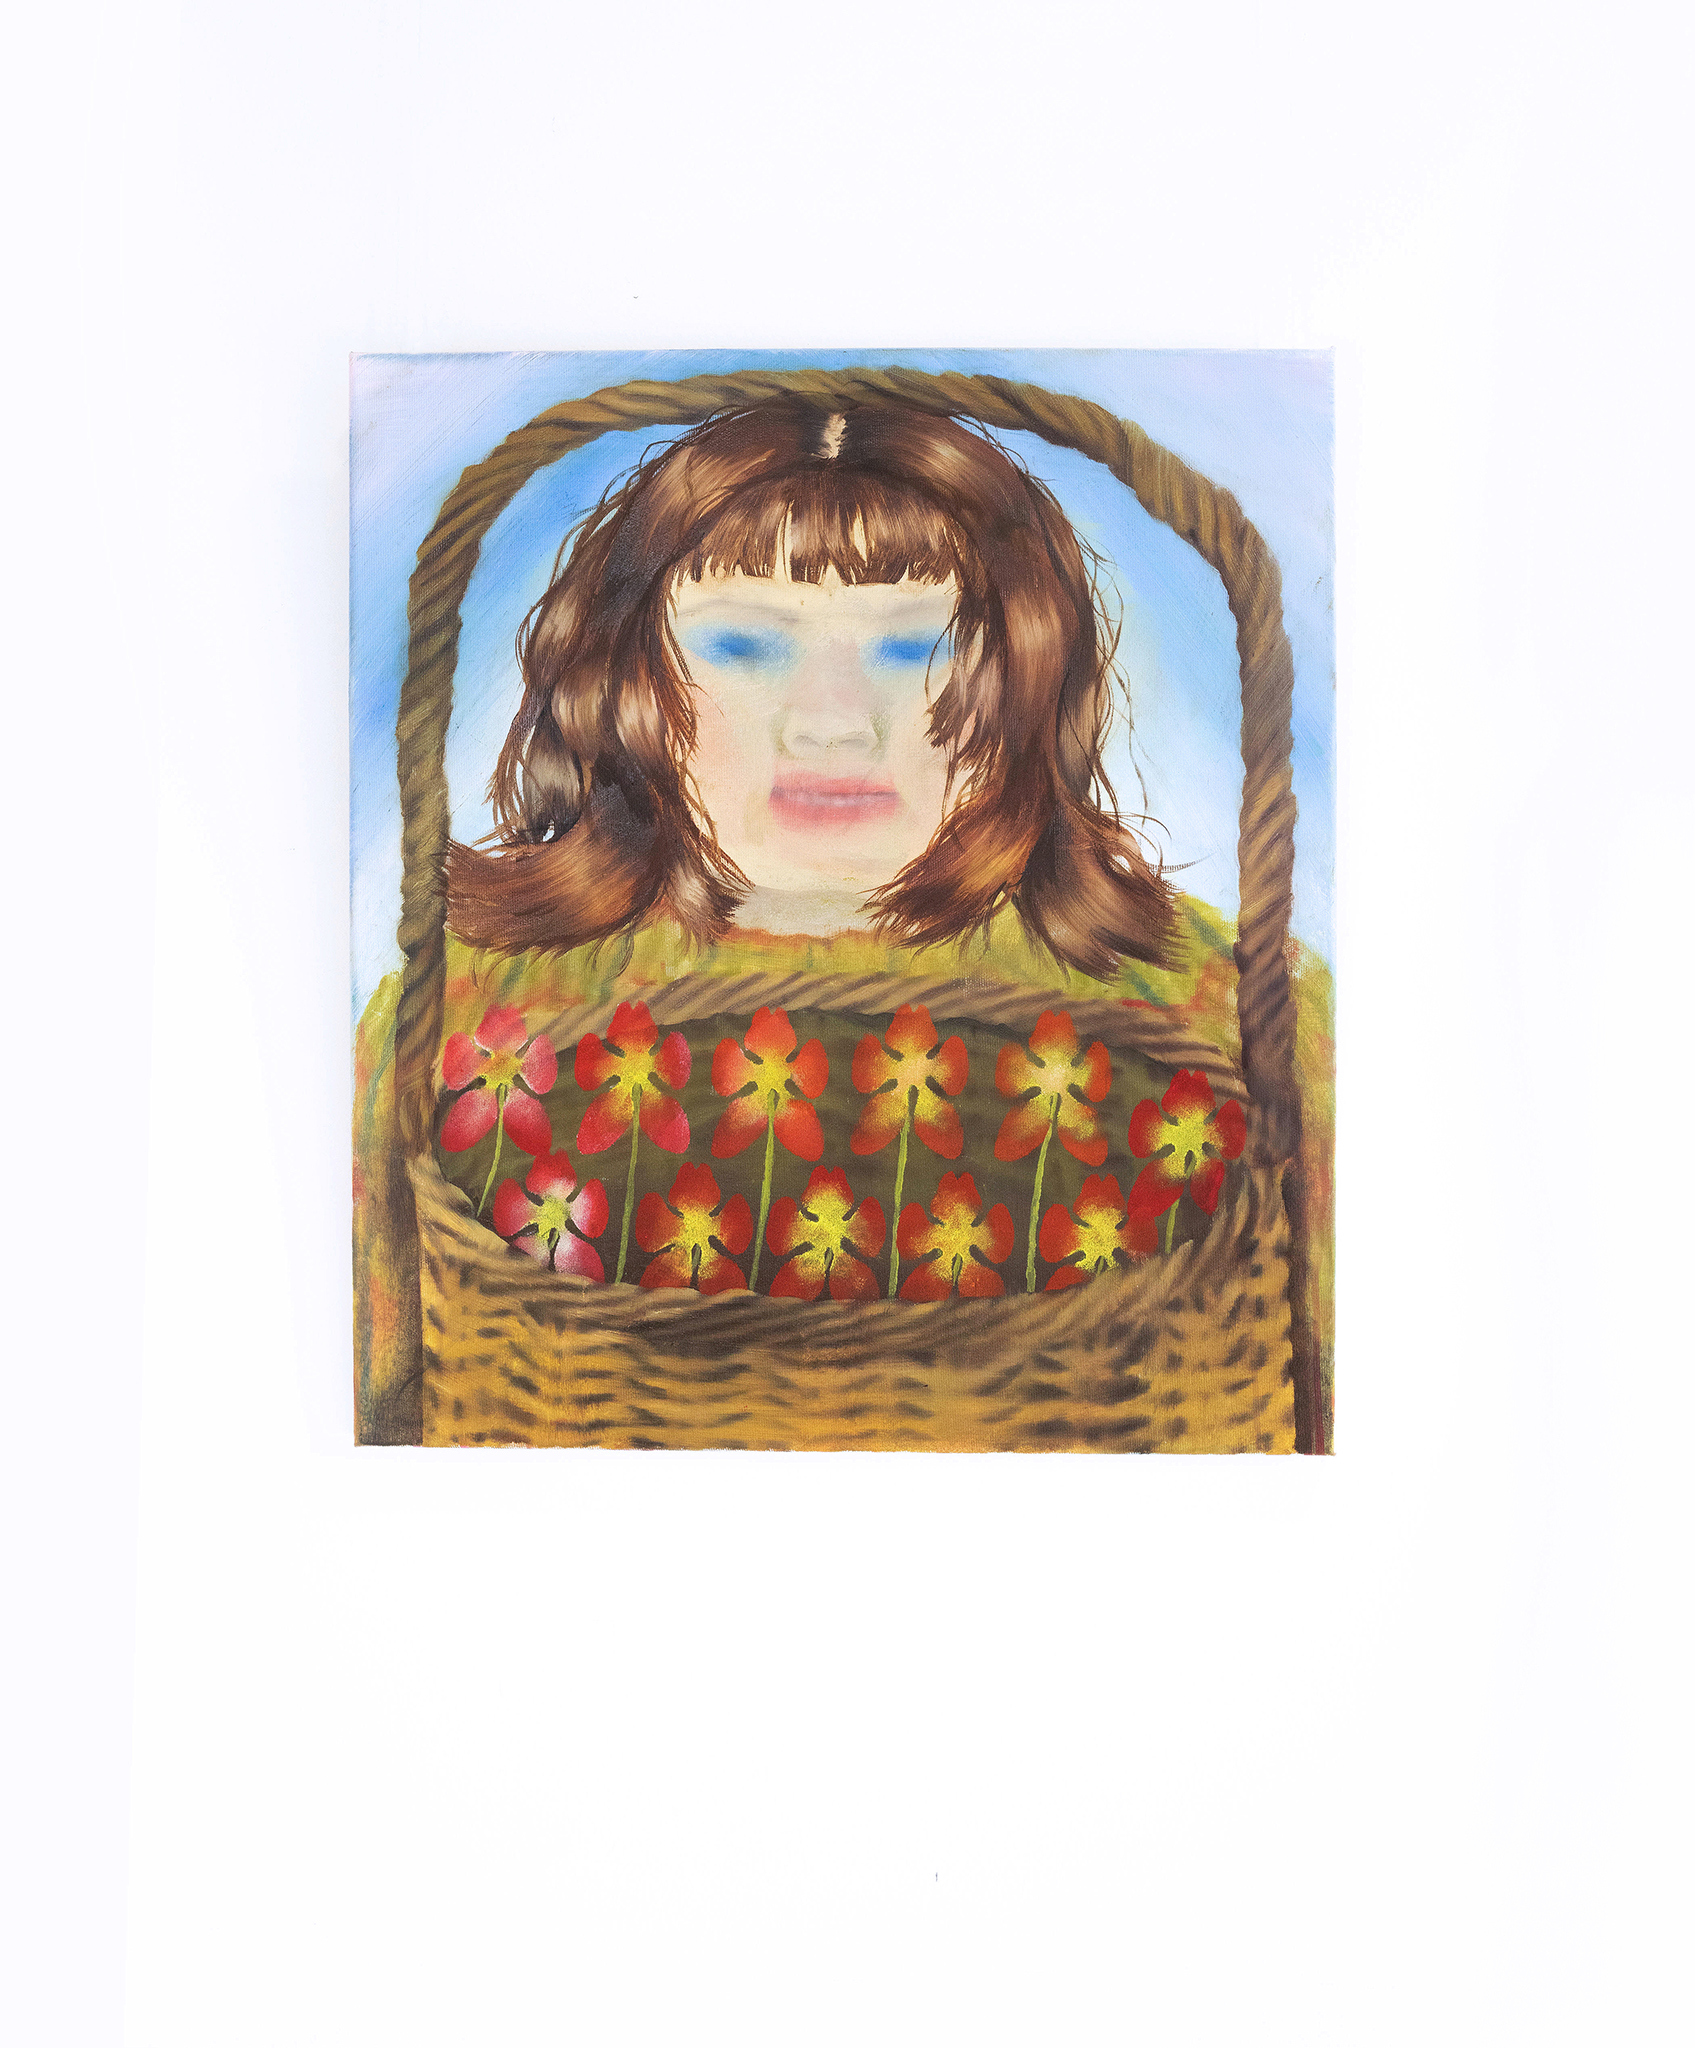 Ramsko, Blumenkorb / A Basket of Flowers, oil on canvas, 60 cm x 50 cm, 2022